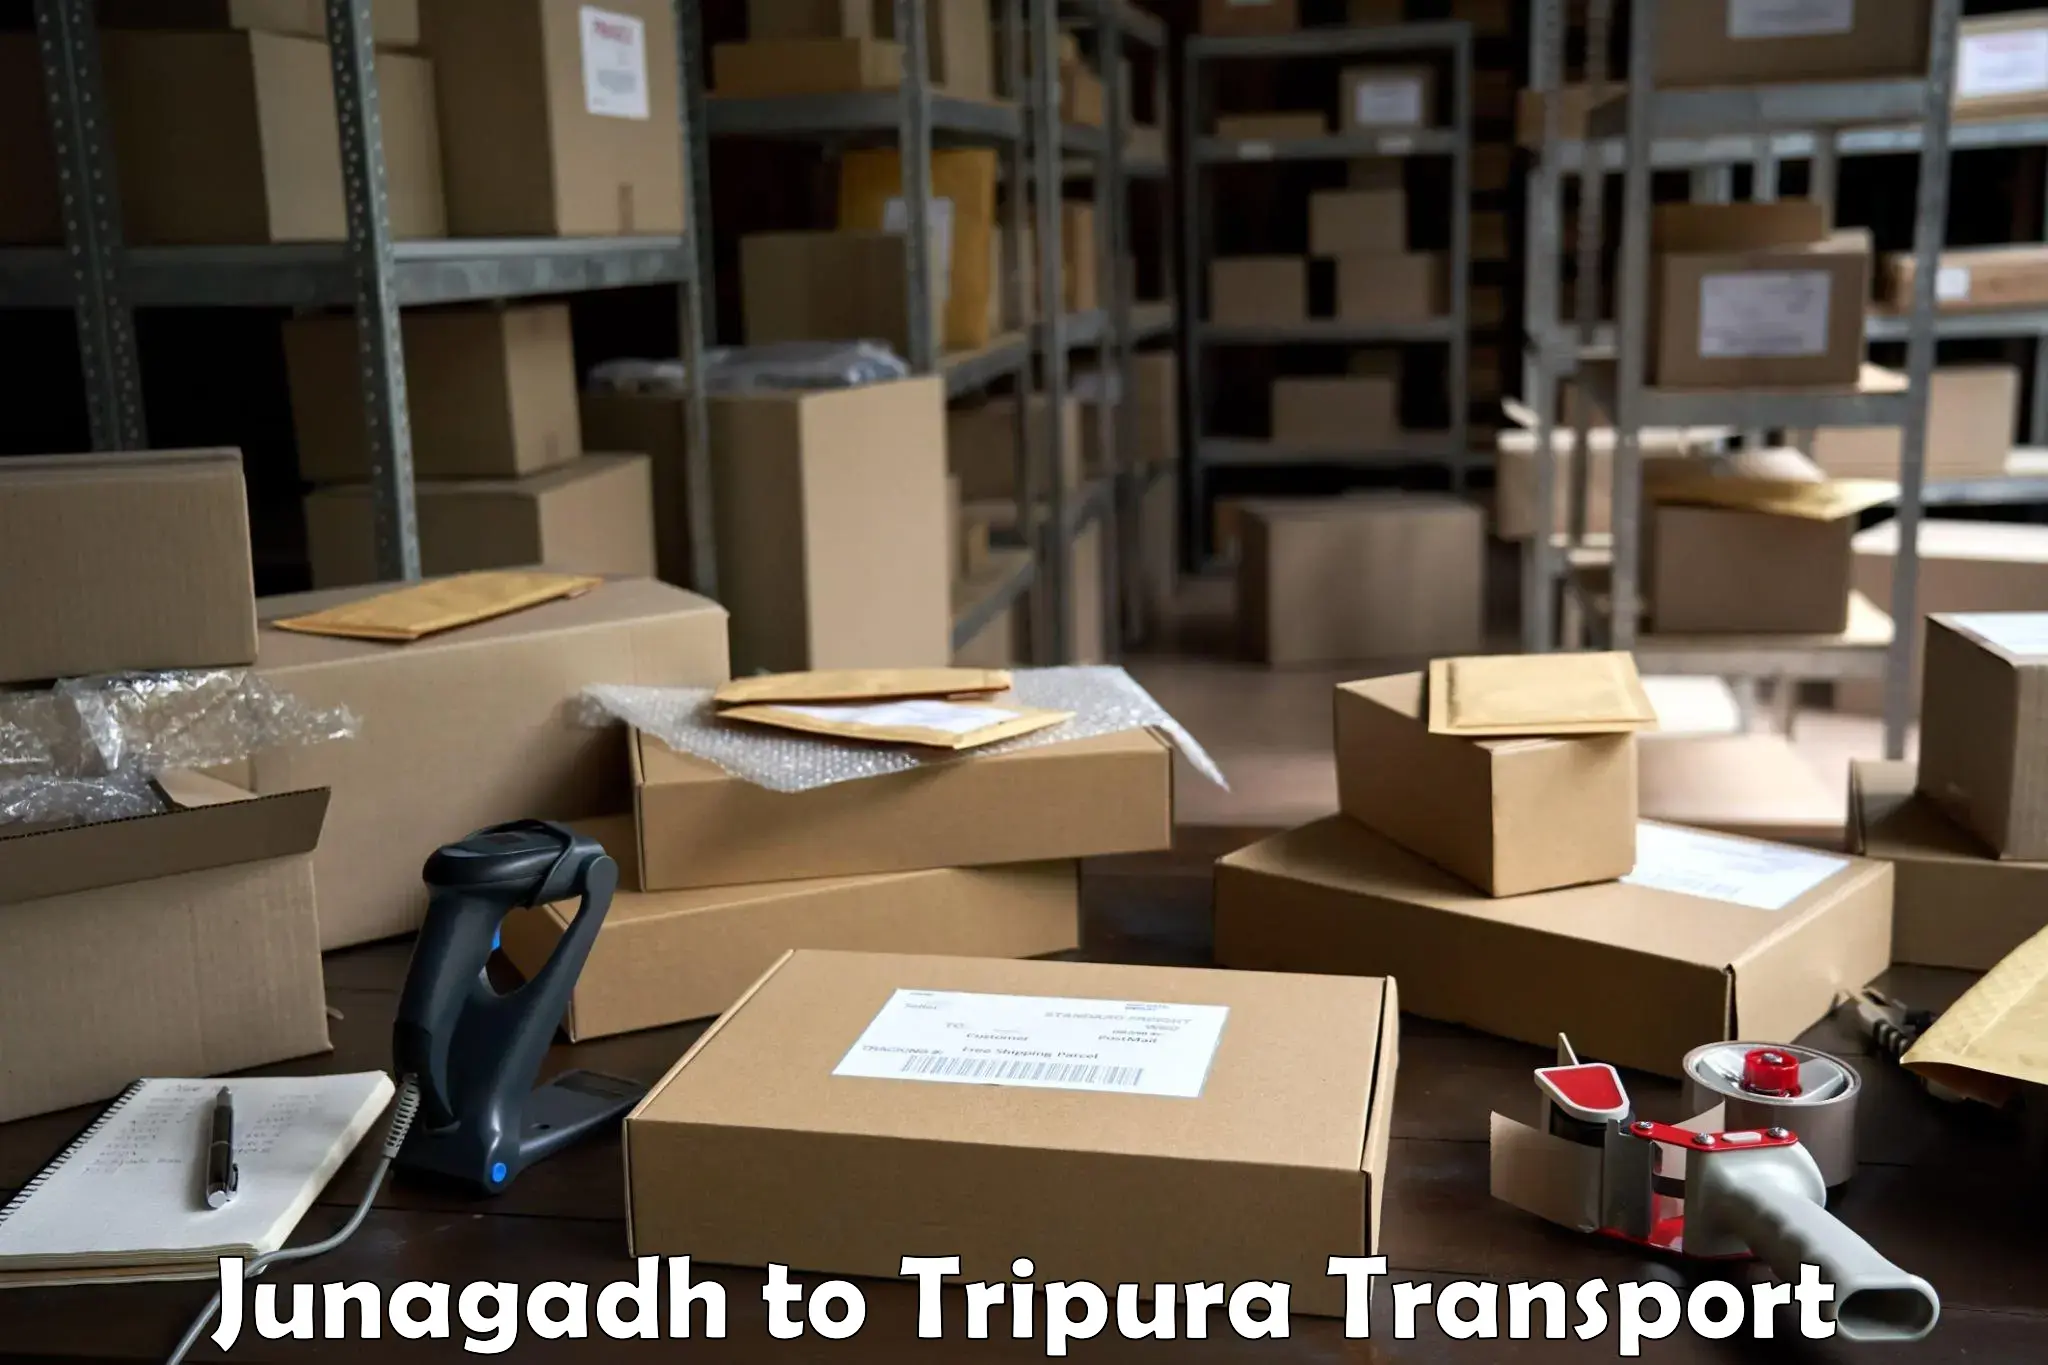 Road transport online services Junagadh to Udaipur Tripura